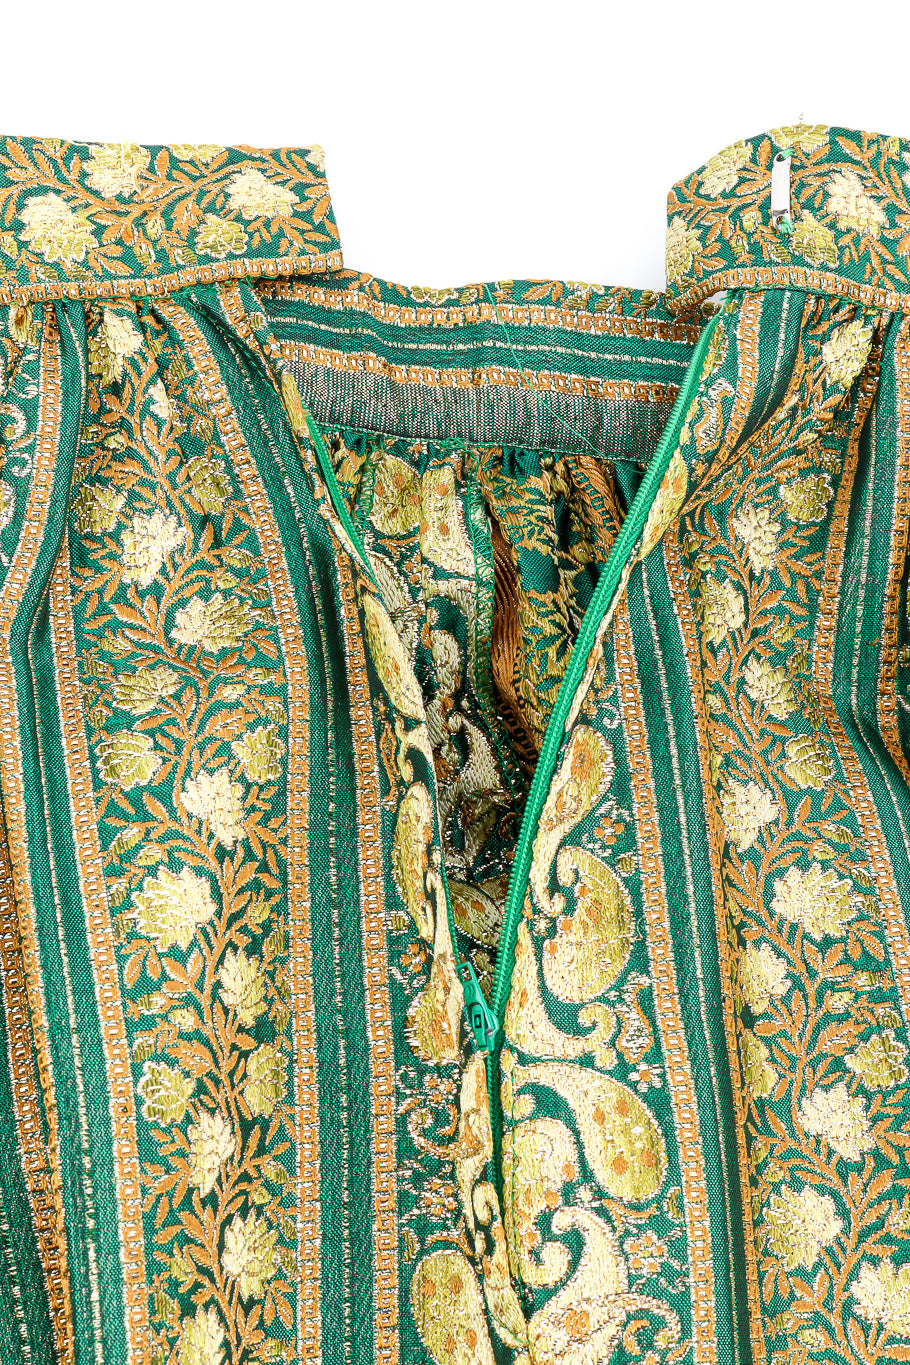 Vintage metallic skirt unzipped @recessla